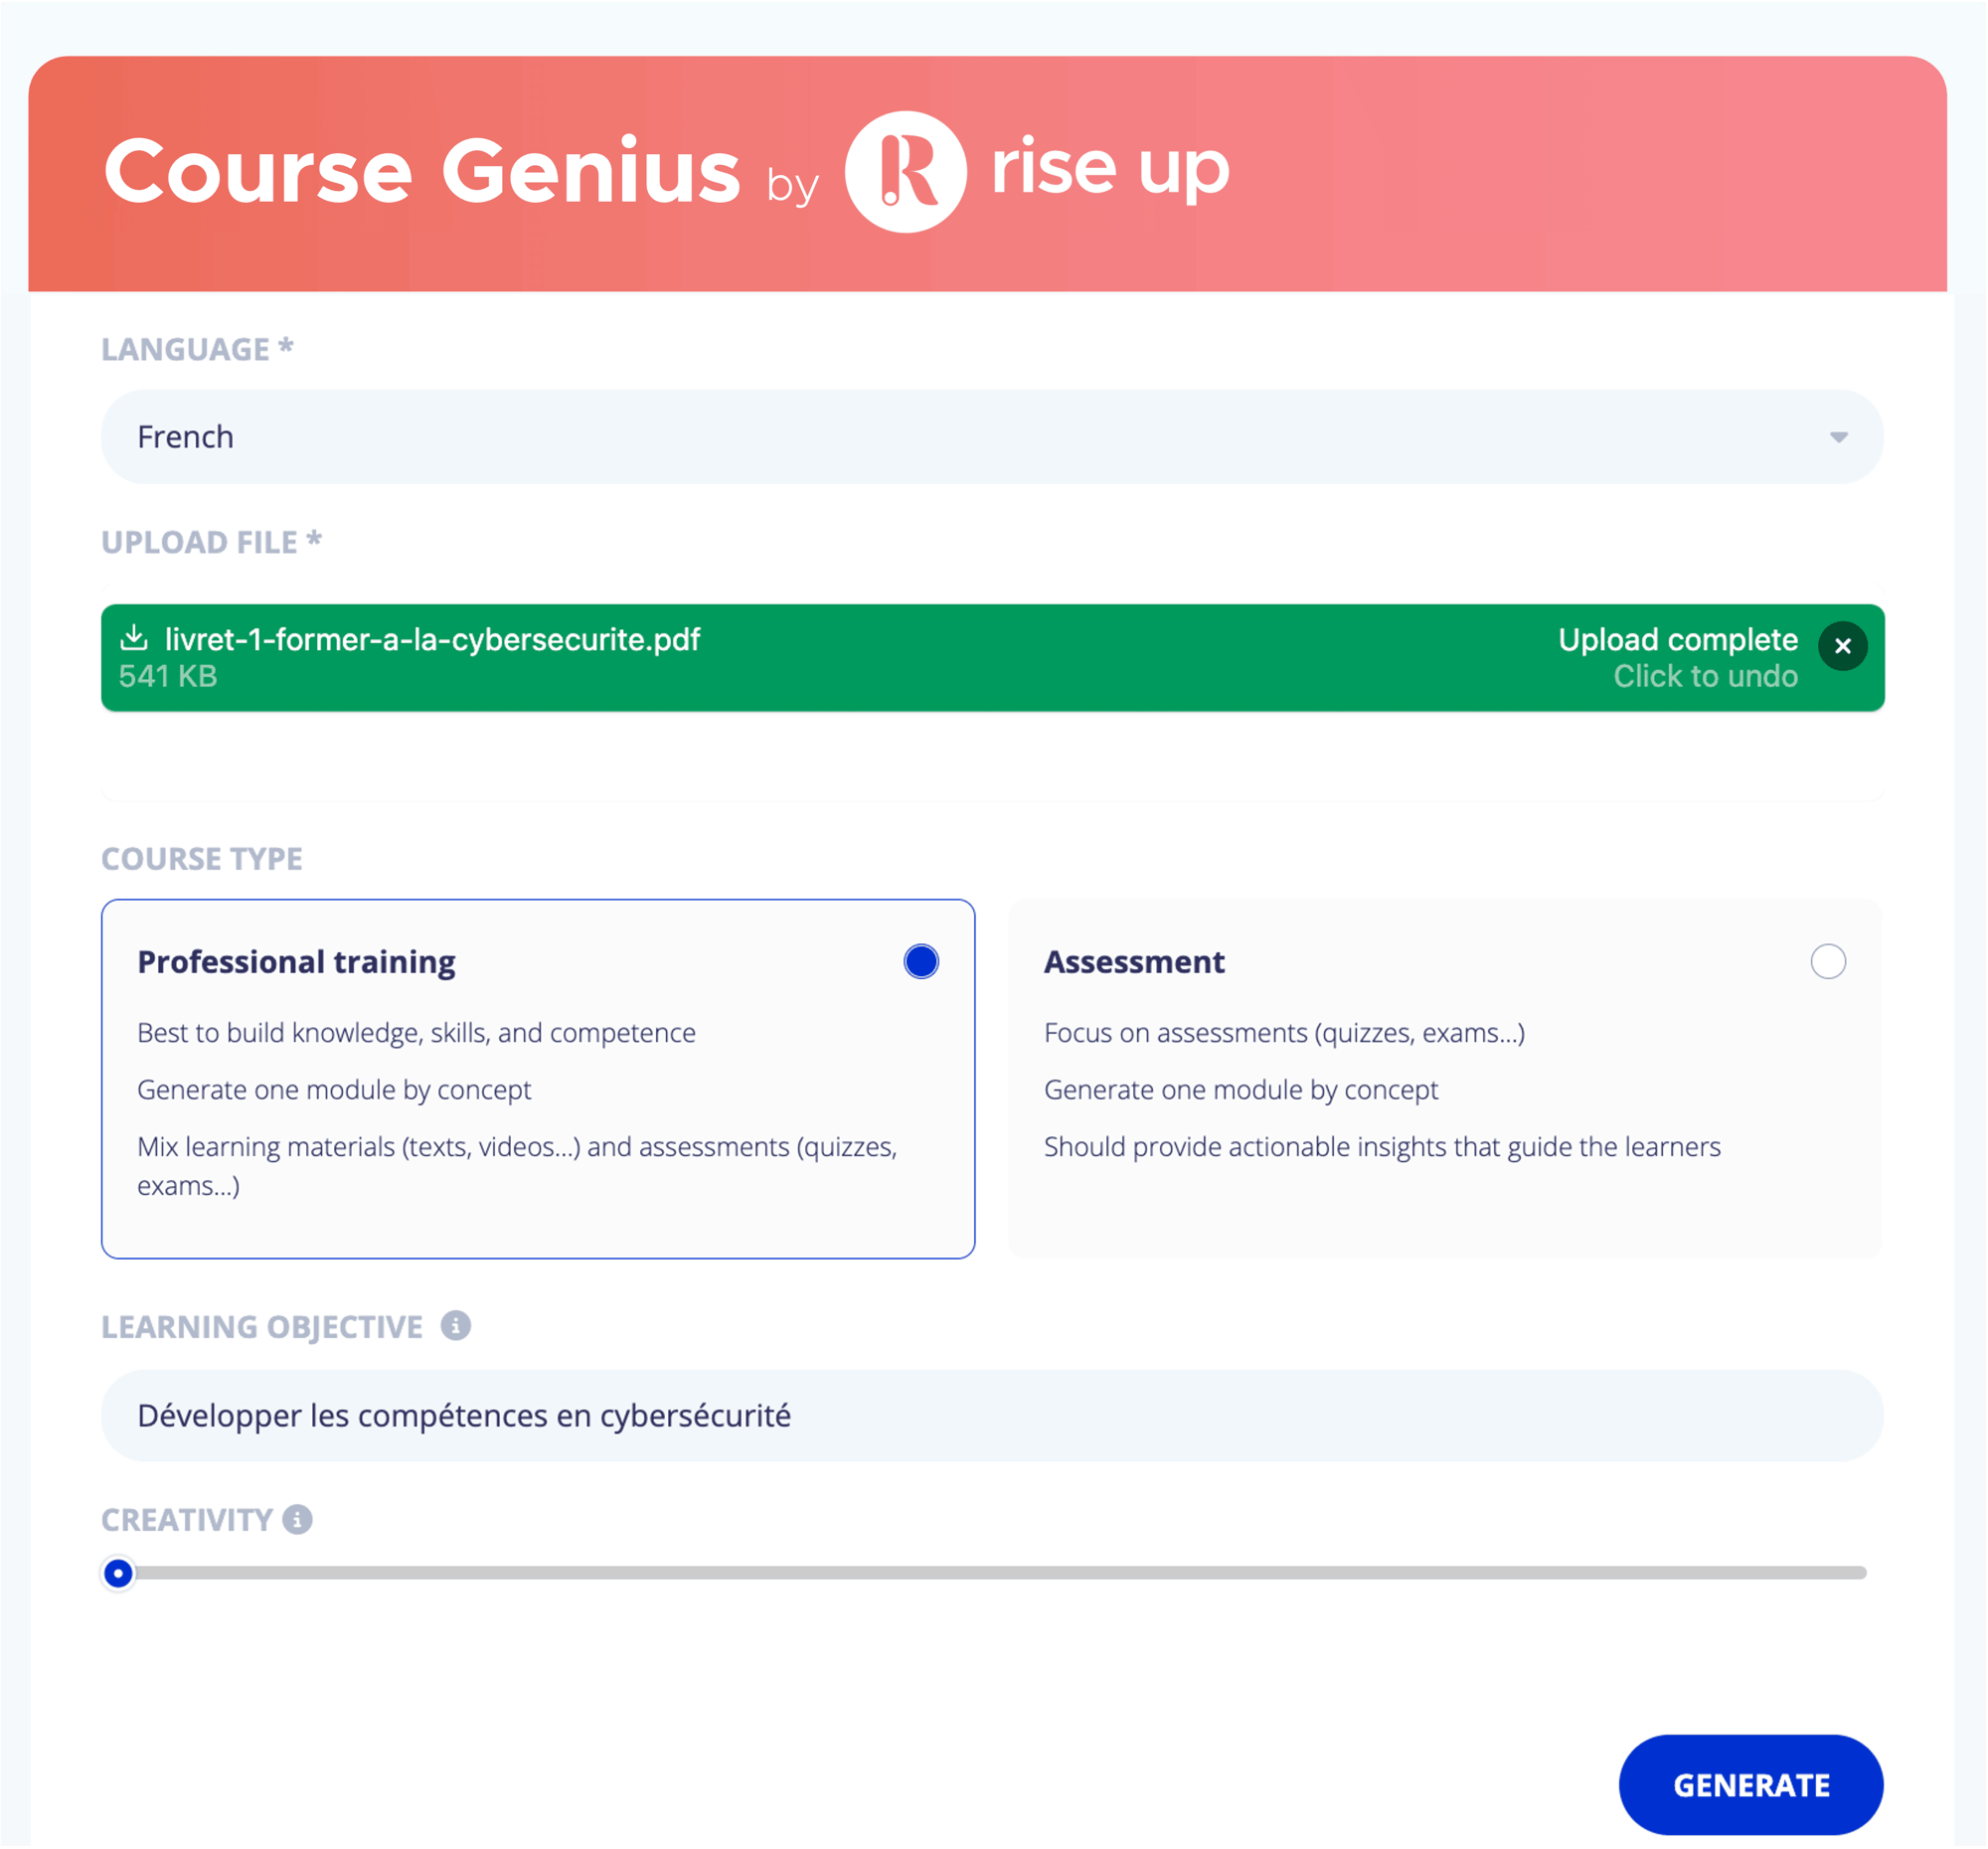 course-genius-madebycricri (2)